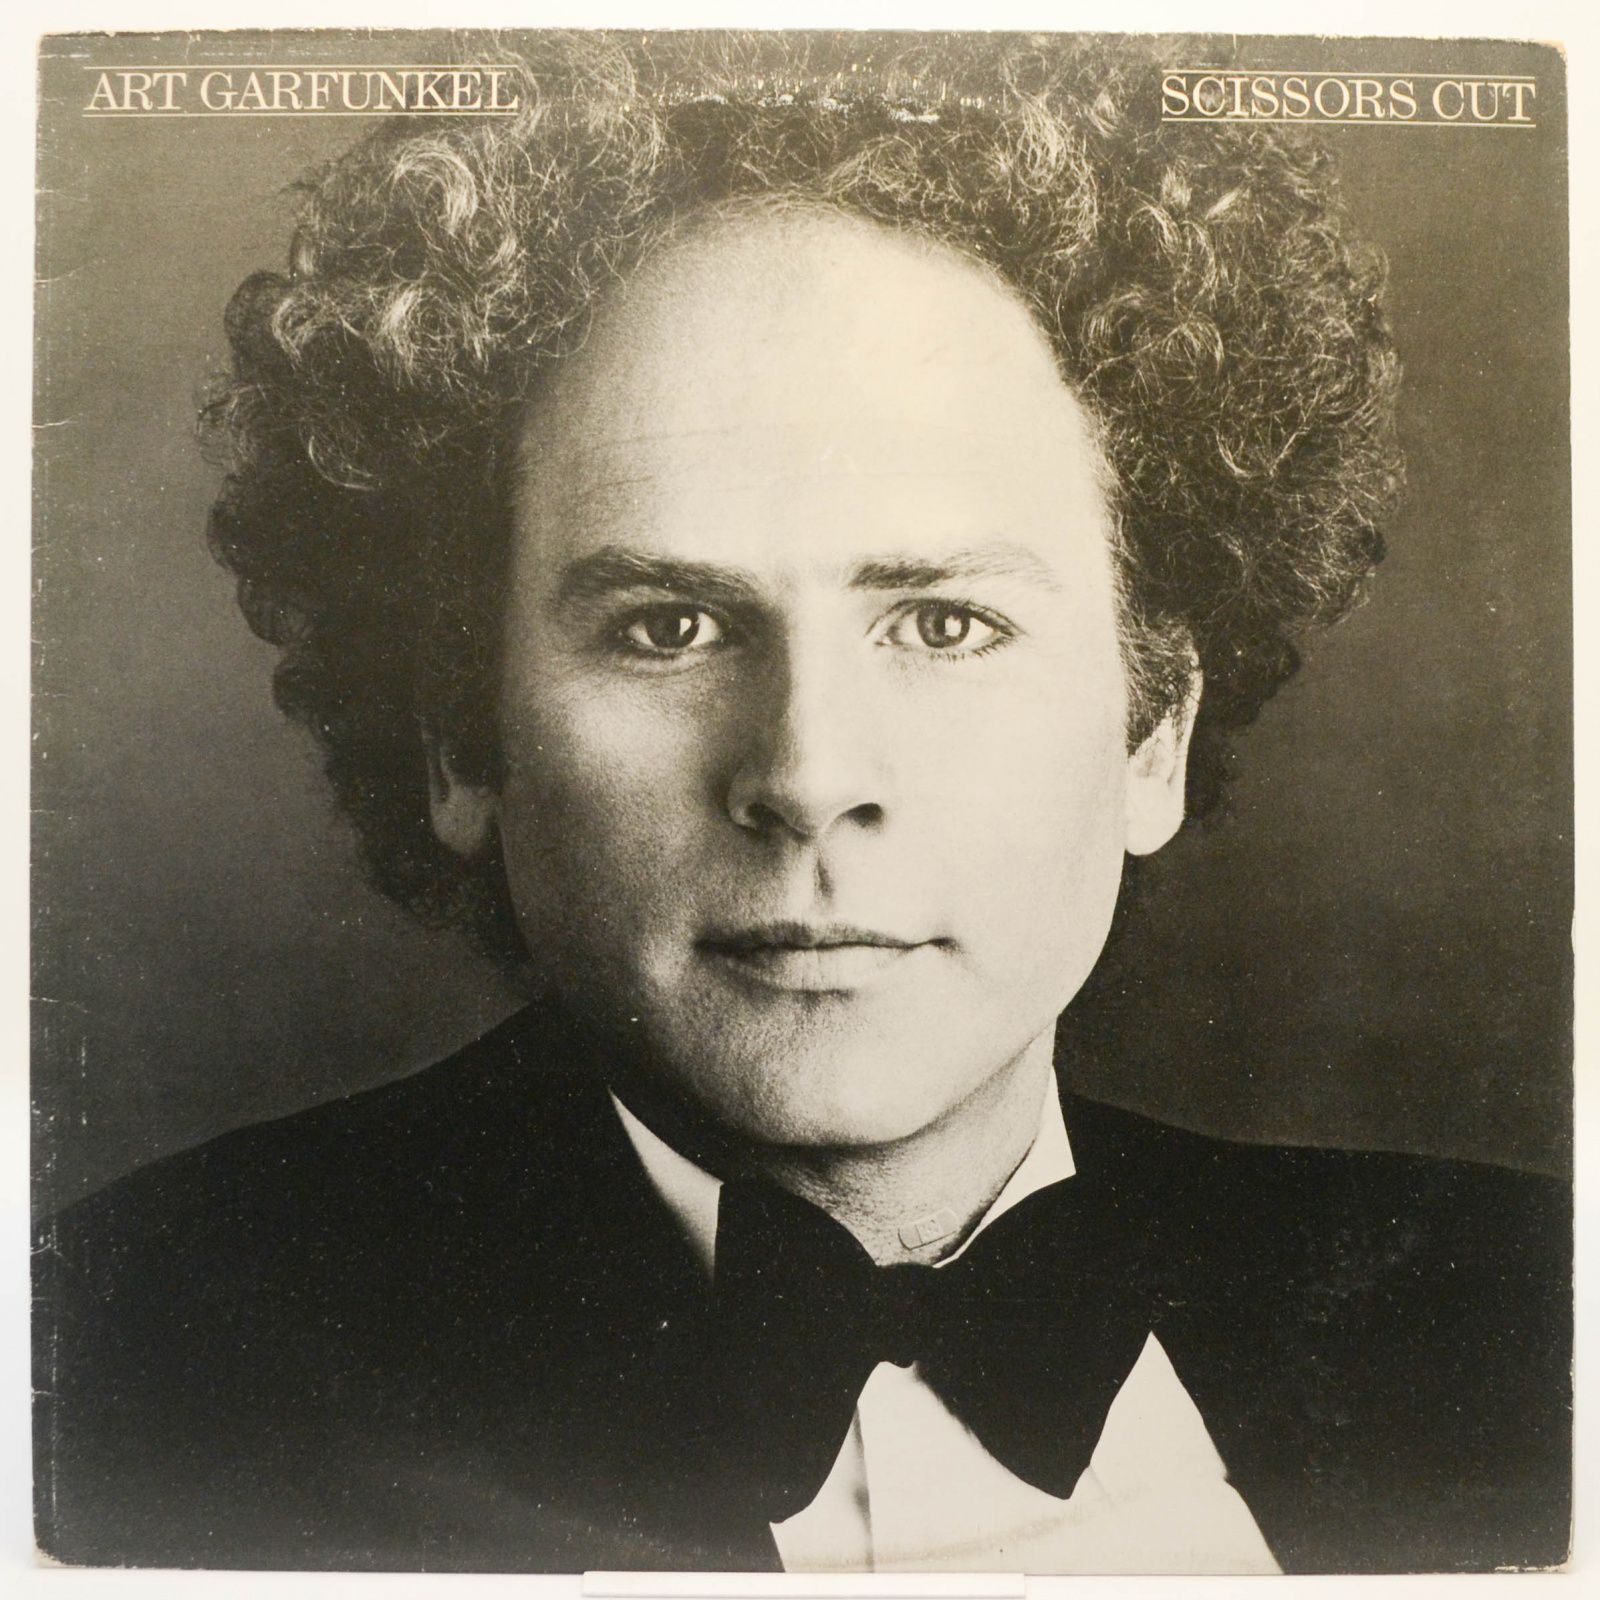 Art Garfunkel — Scissors Cut, 1981